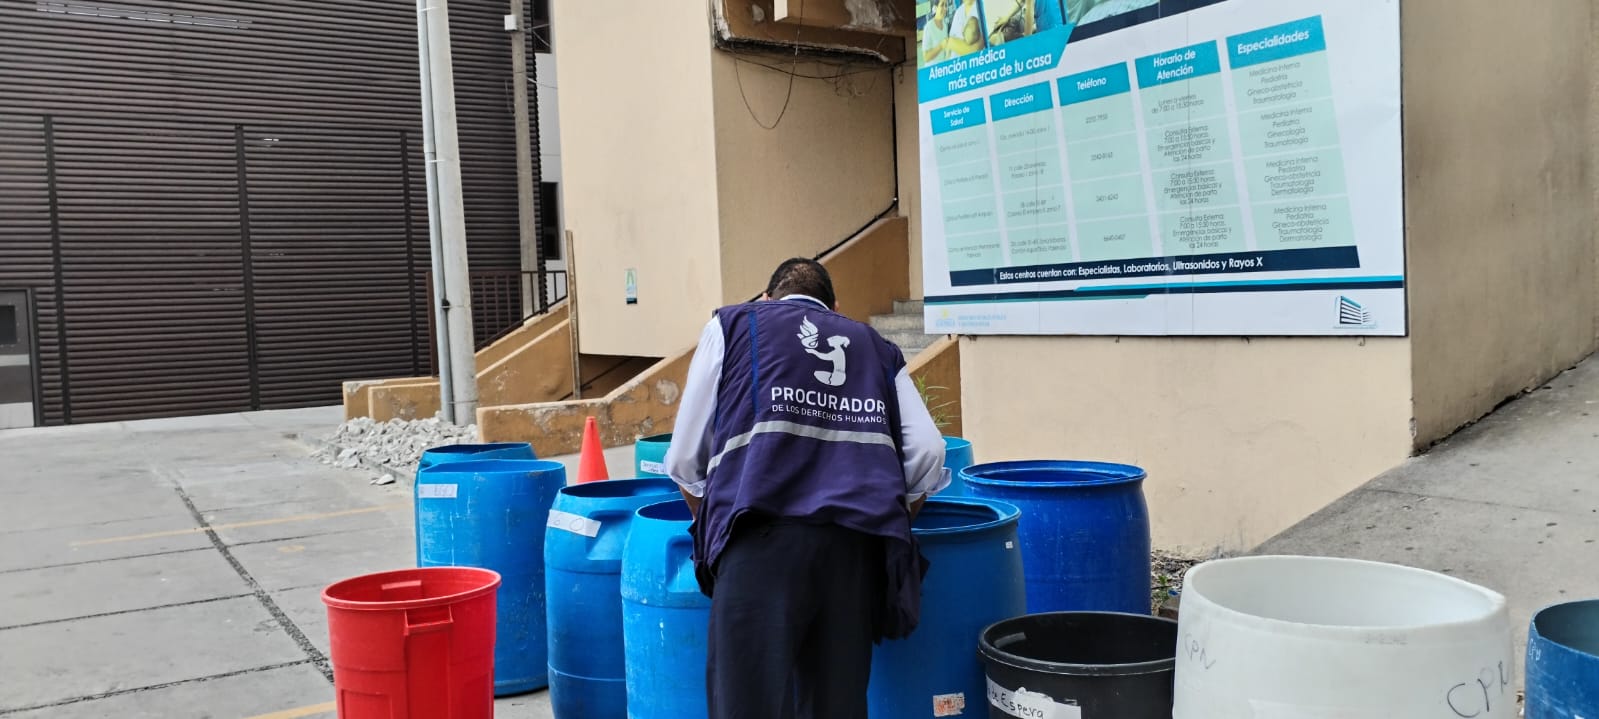 La crisis por problemas en el suministro de agua en el Hospital General San Juan de Dios continÃºa. (Foto Prensa Libre: PDH)